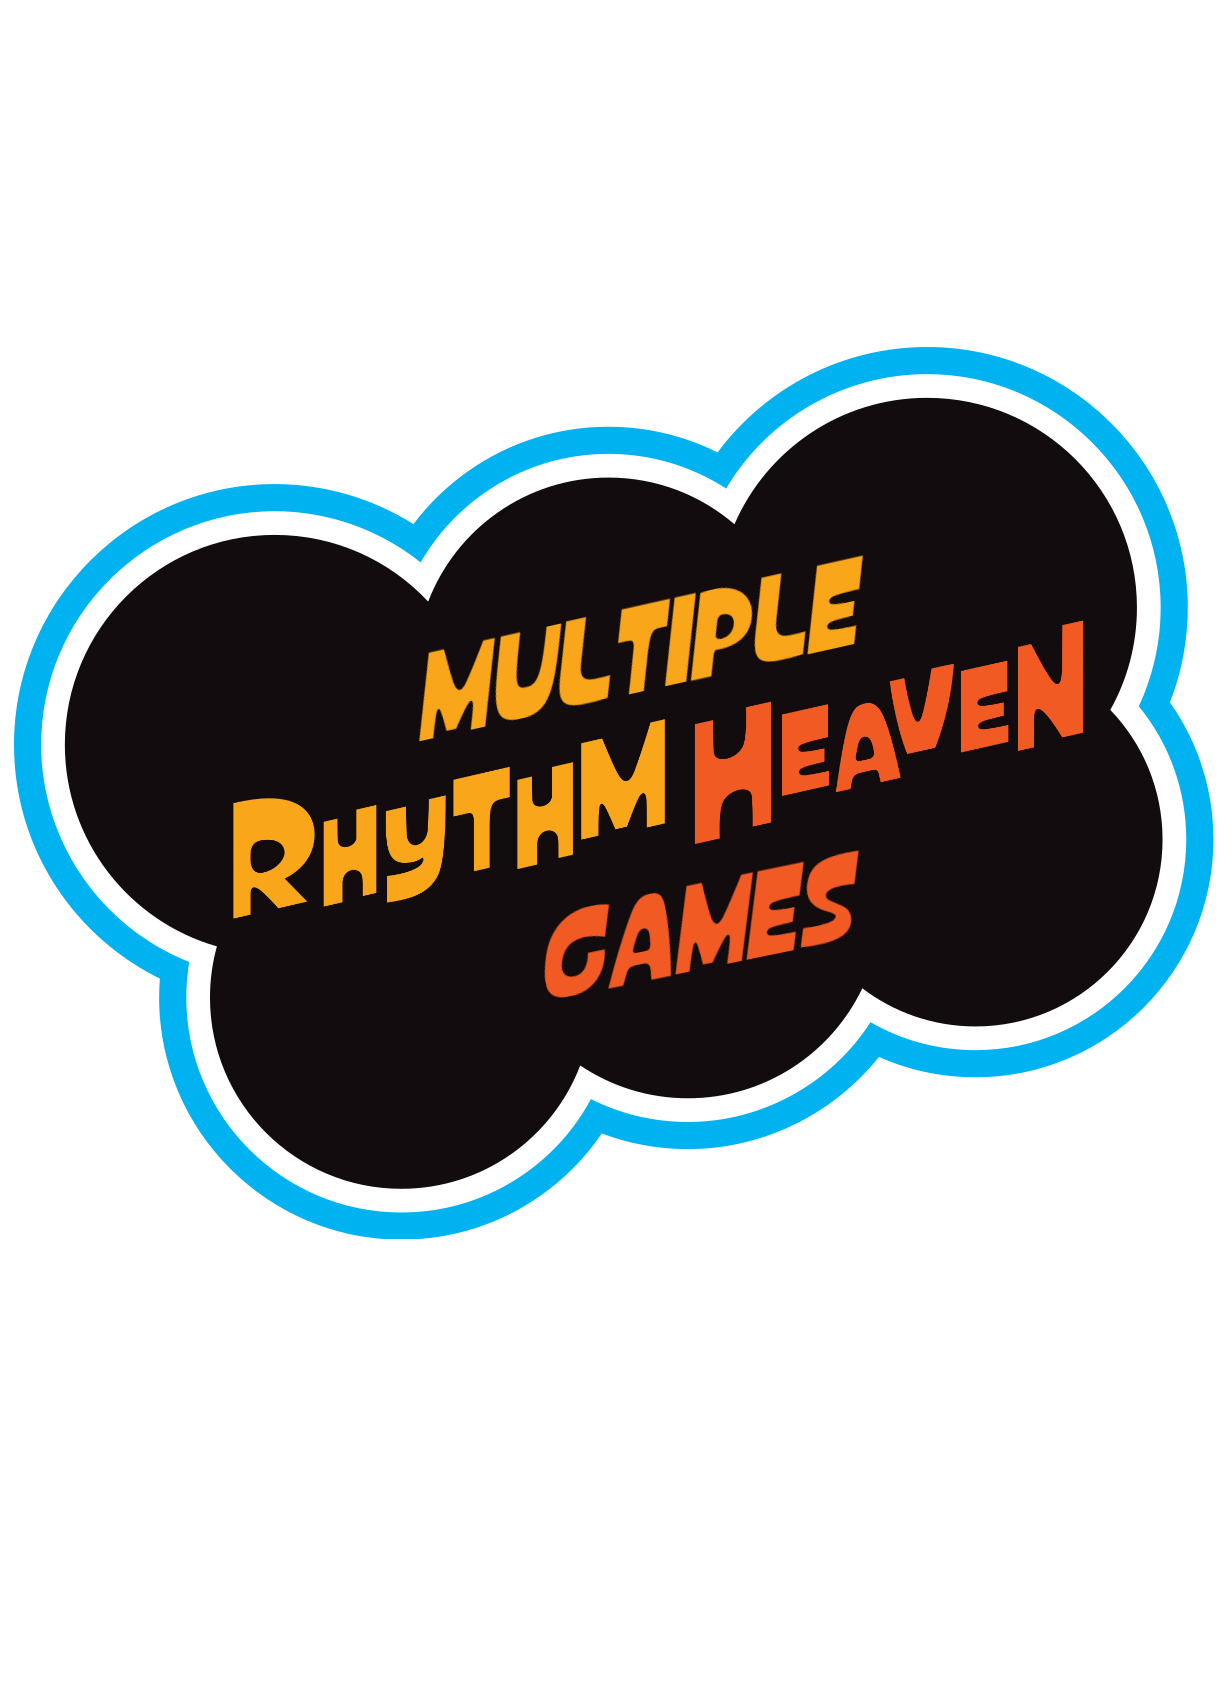 Multiple Rhythm Heaven Games